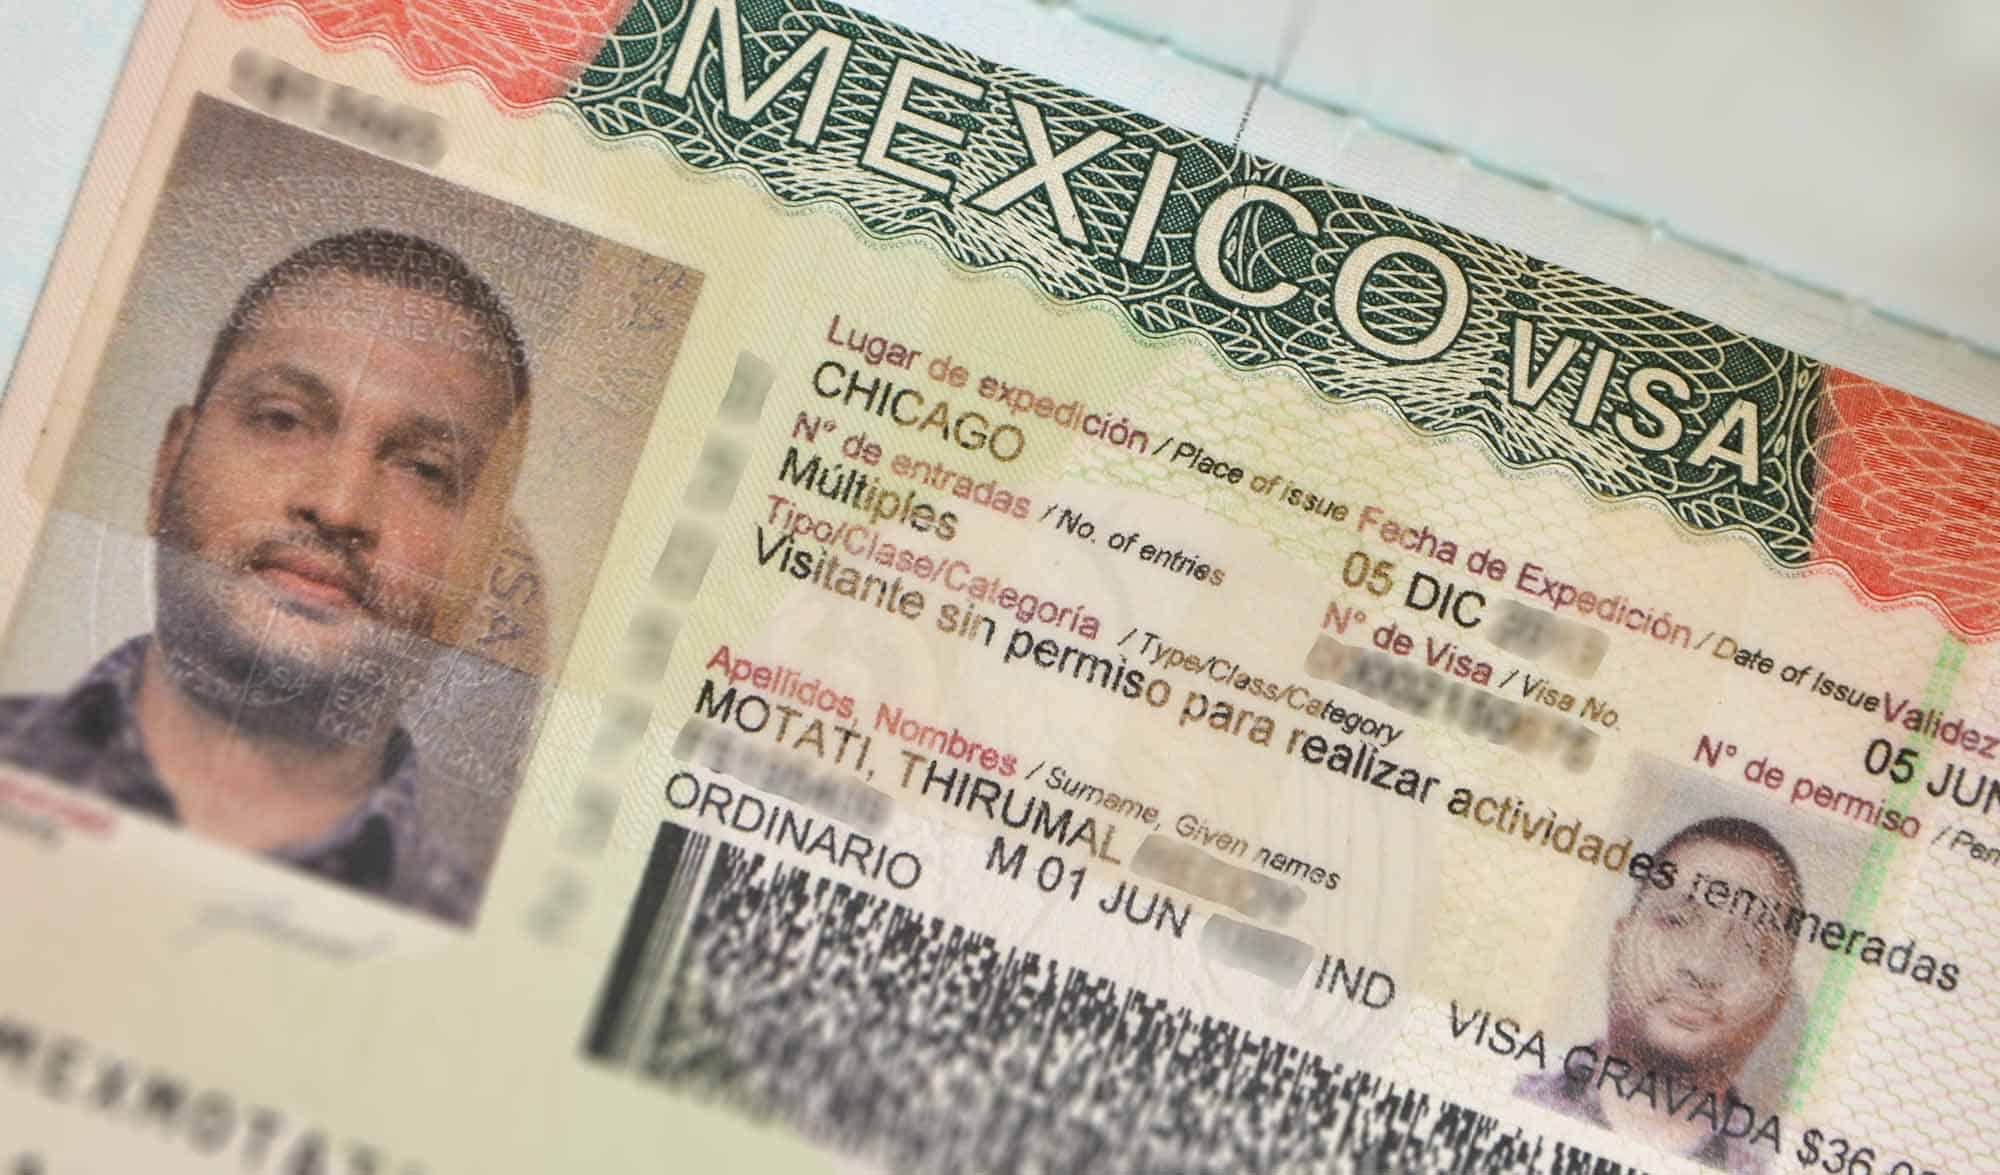 Mexico tourist visa: Requirements and application procedure - Visa Traveler